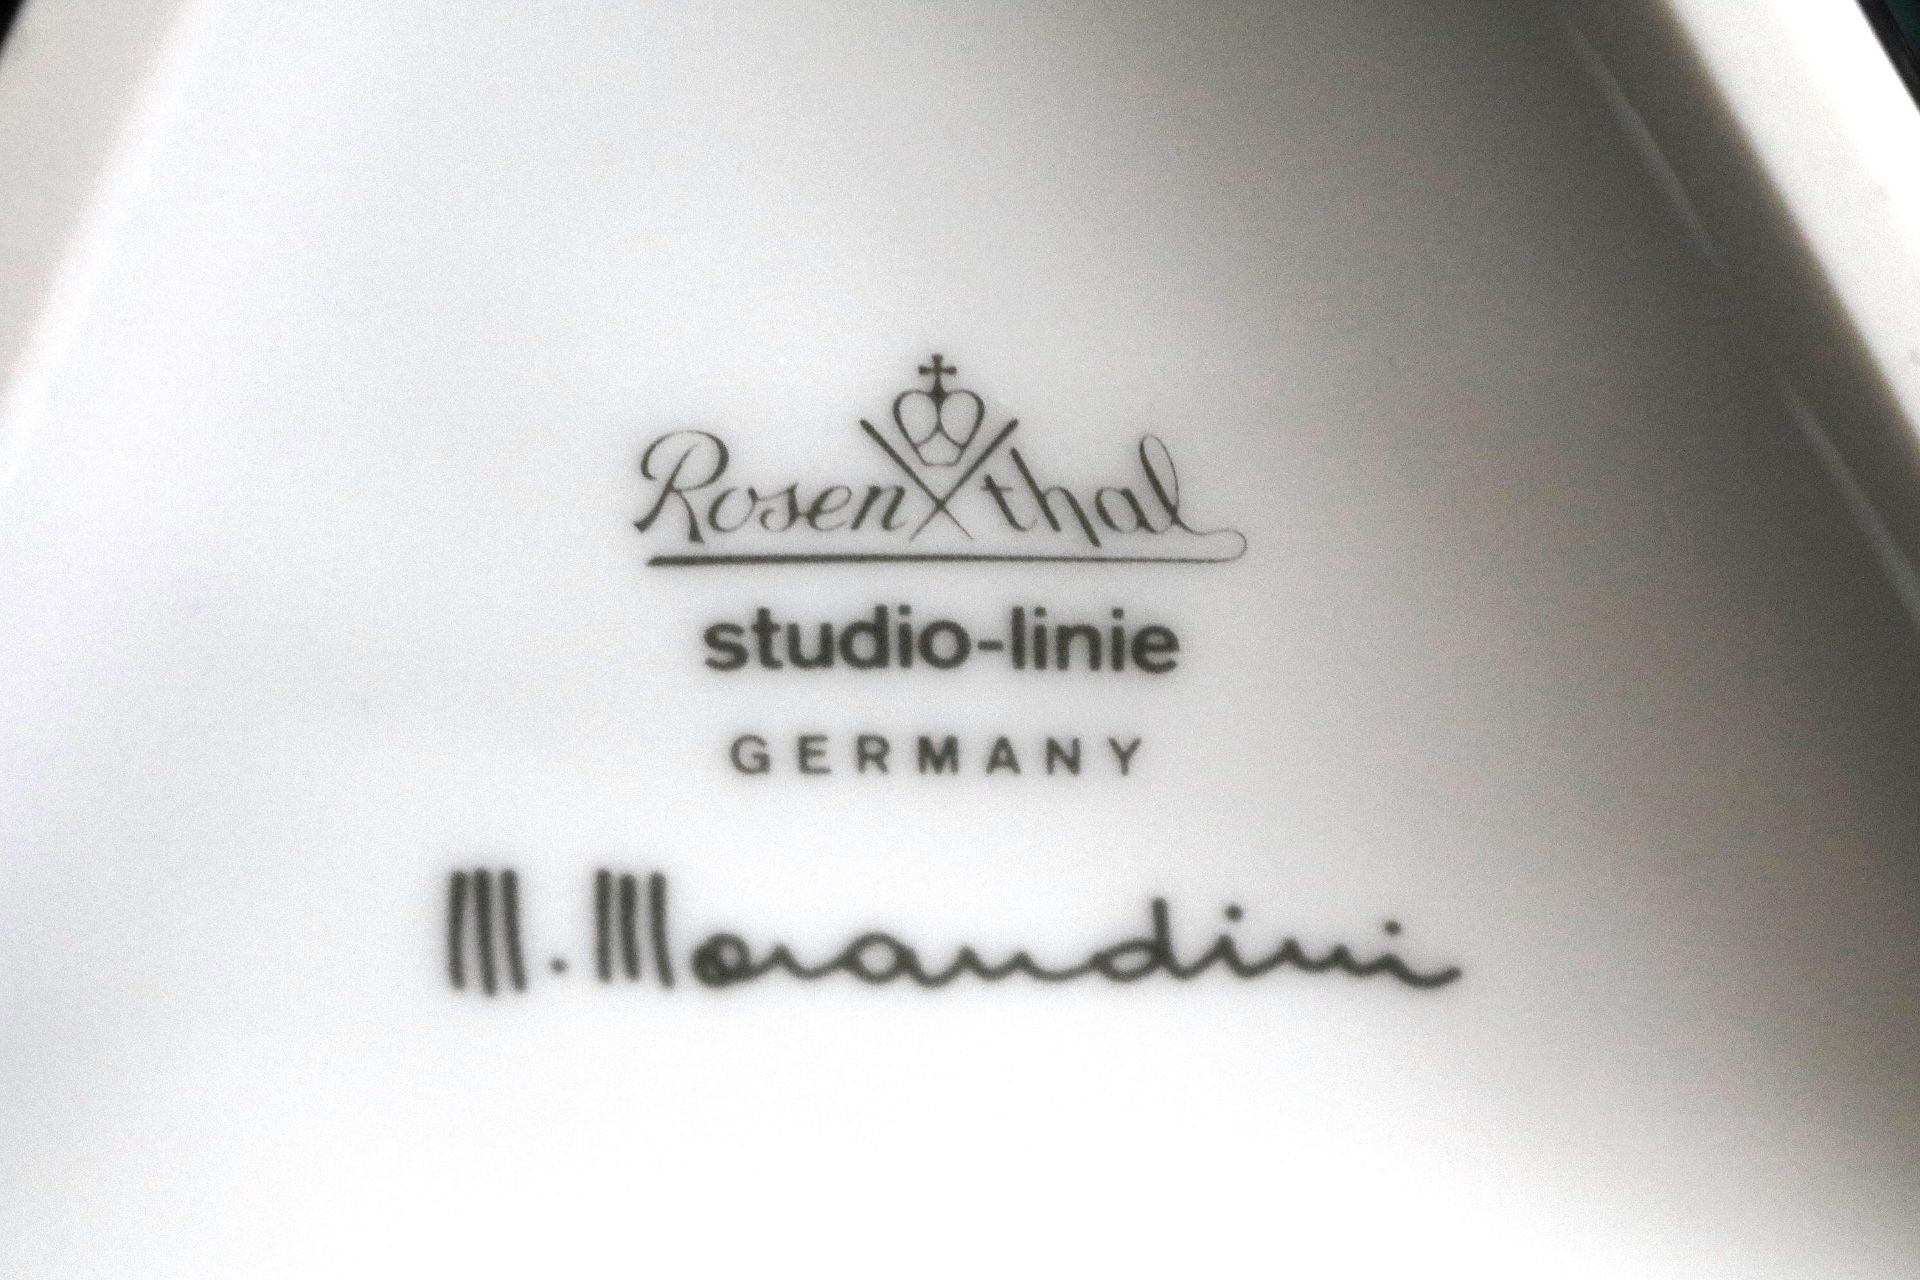 Künstlervase Marcello Morandini "Glück", Rosenthal studio-line, H: 28 cm, 1980er Jahre - Image 5 of 5